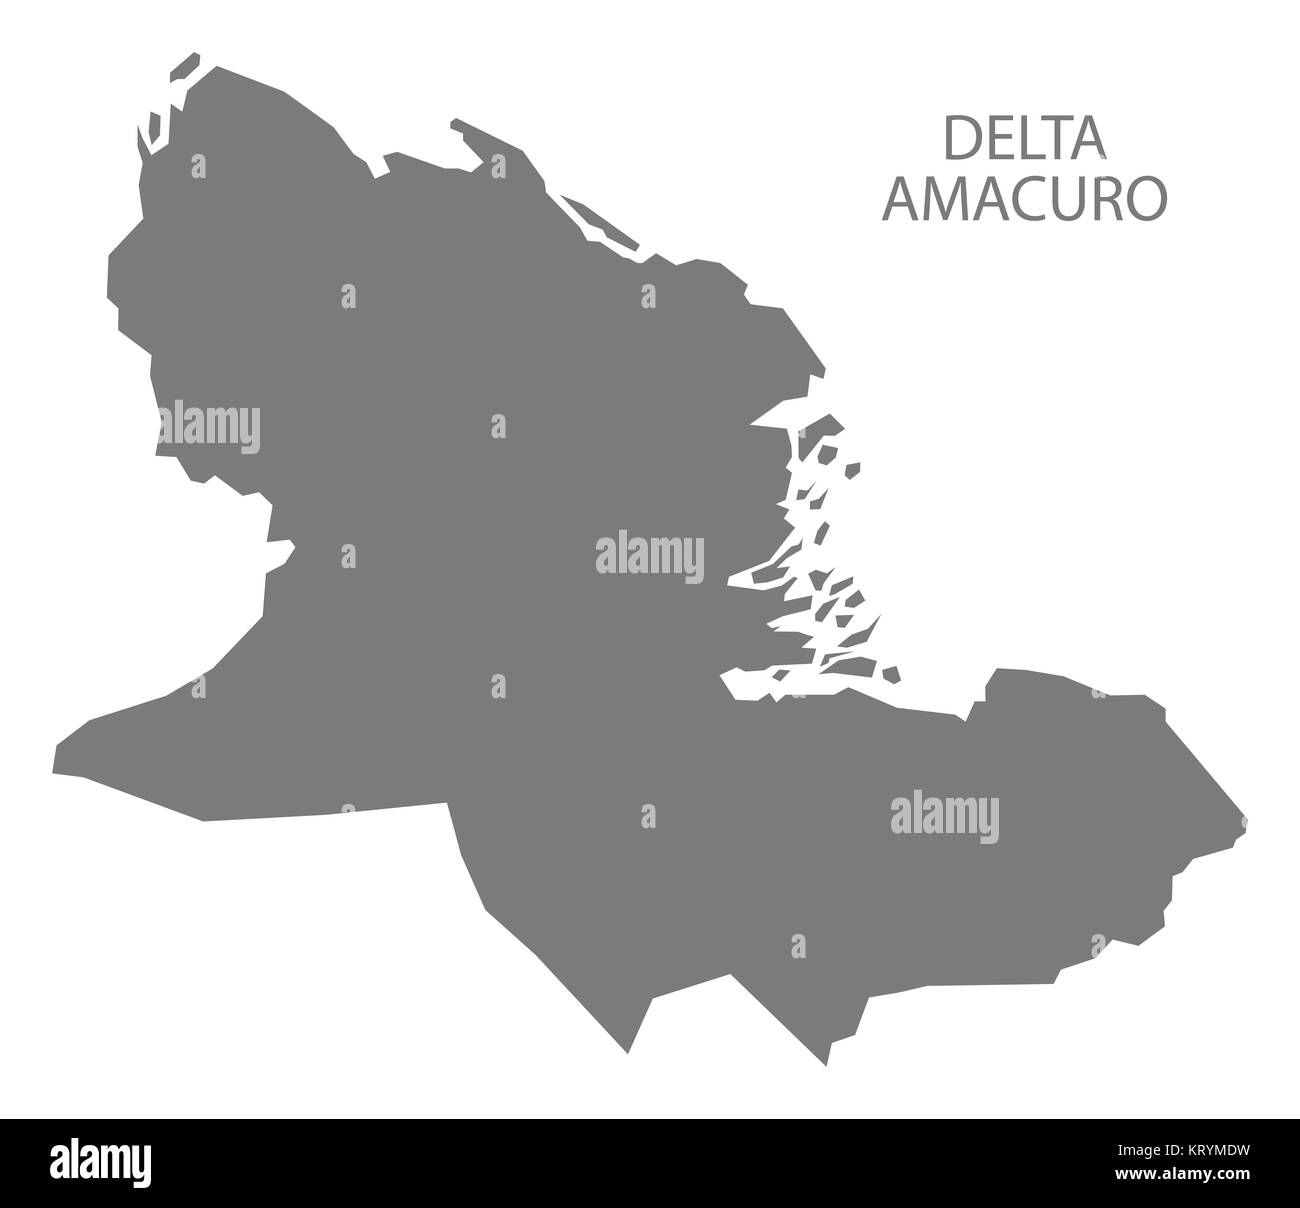 Delta Amacuro Venezuela Map grey Stock Photo